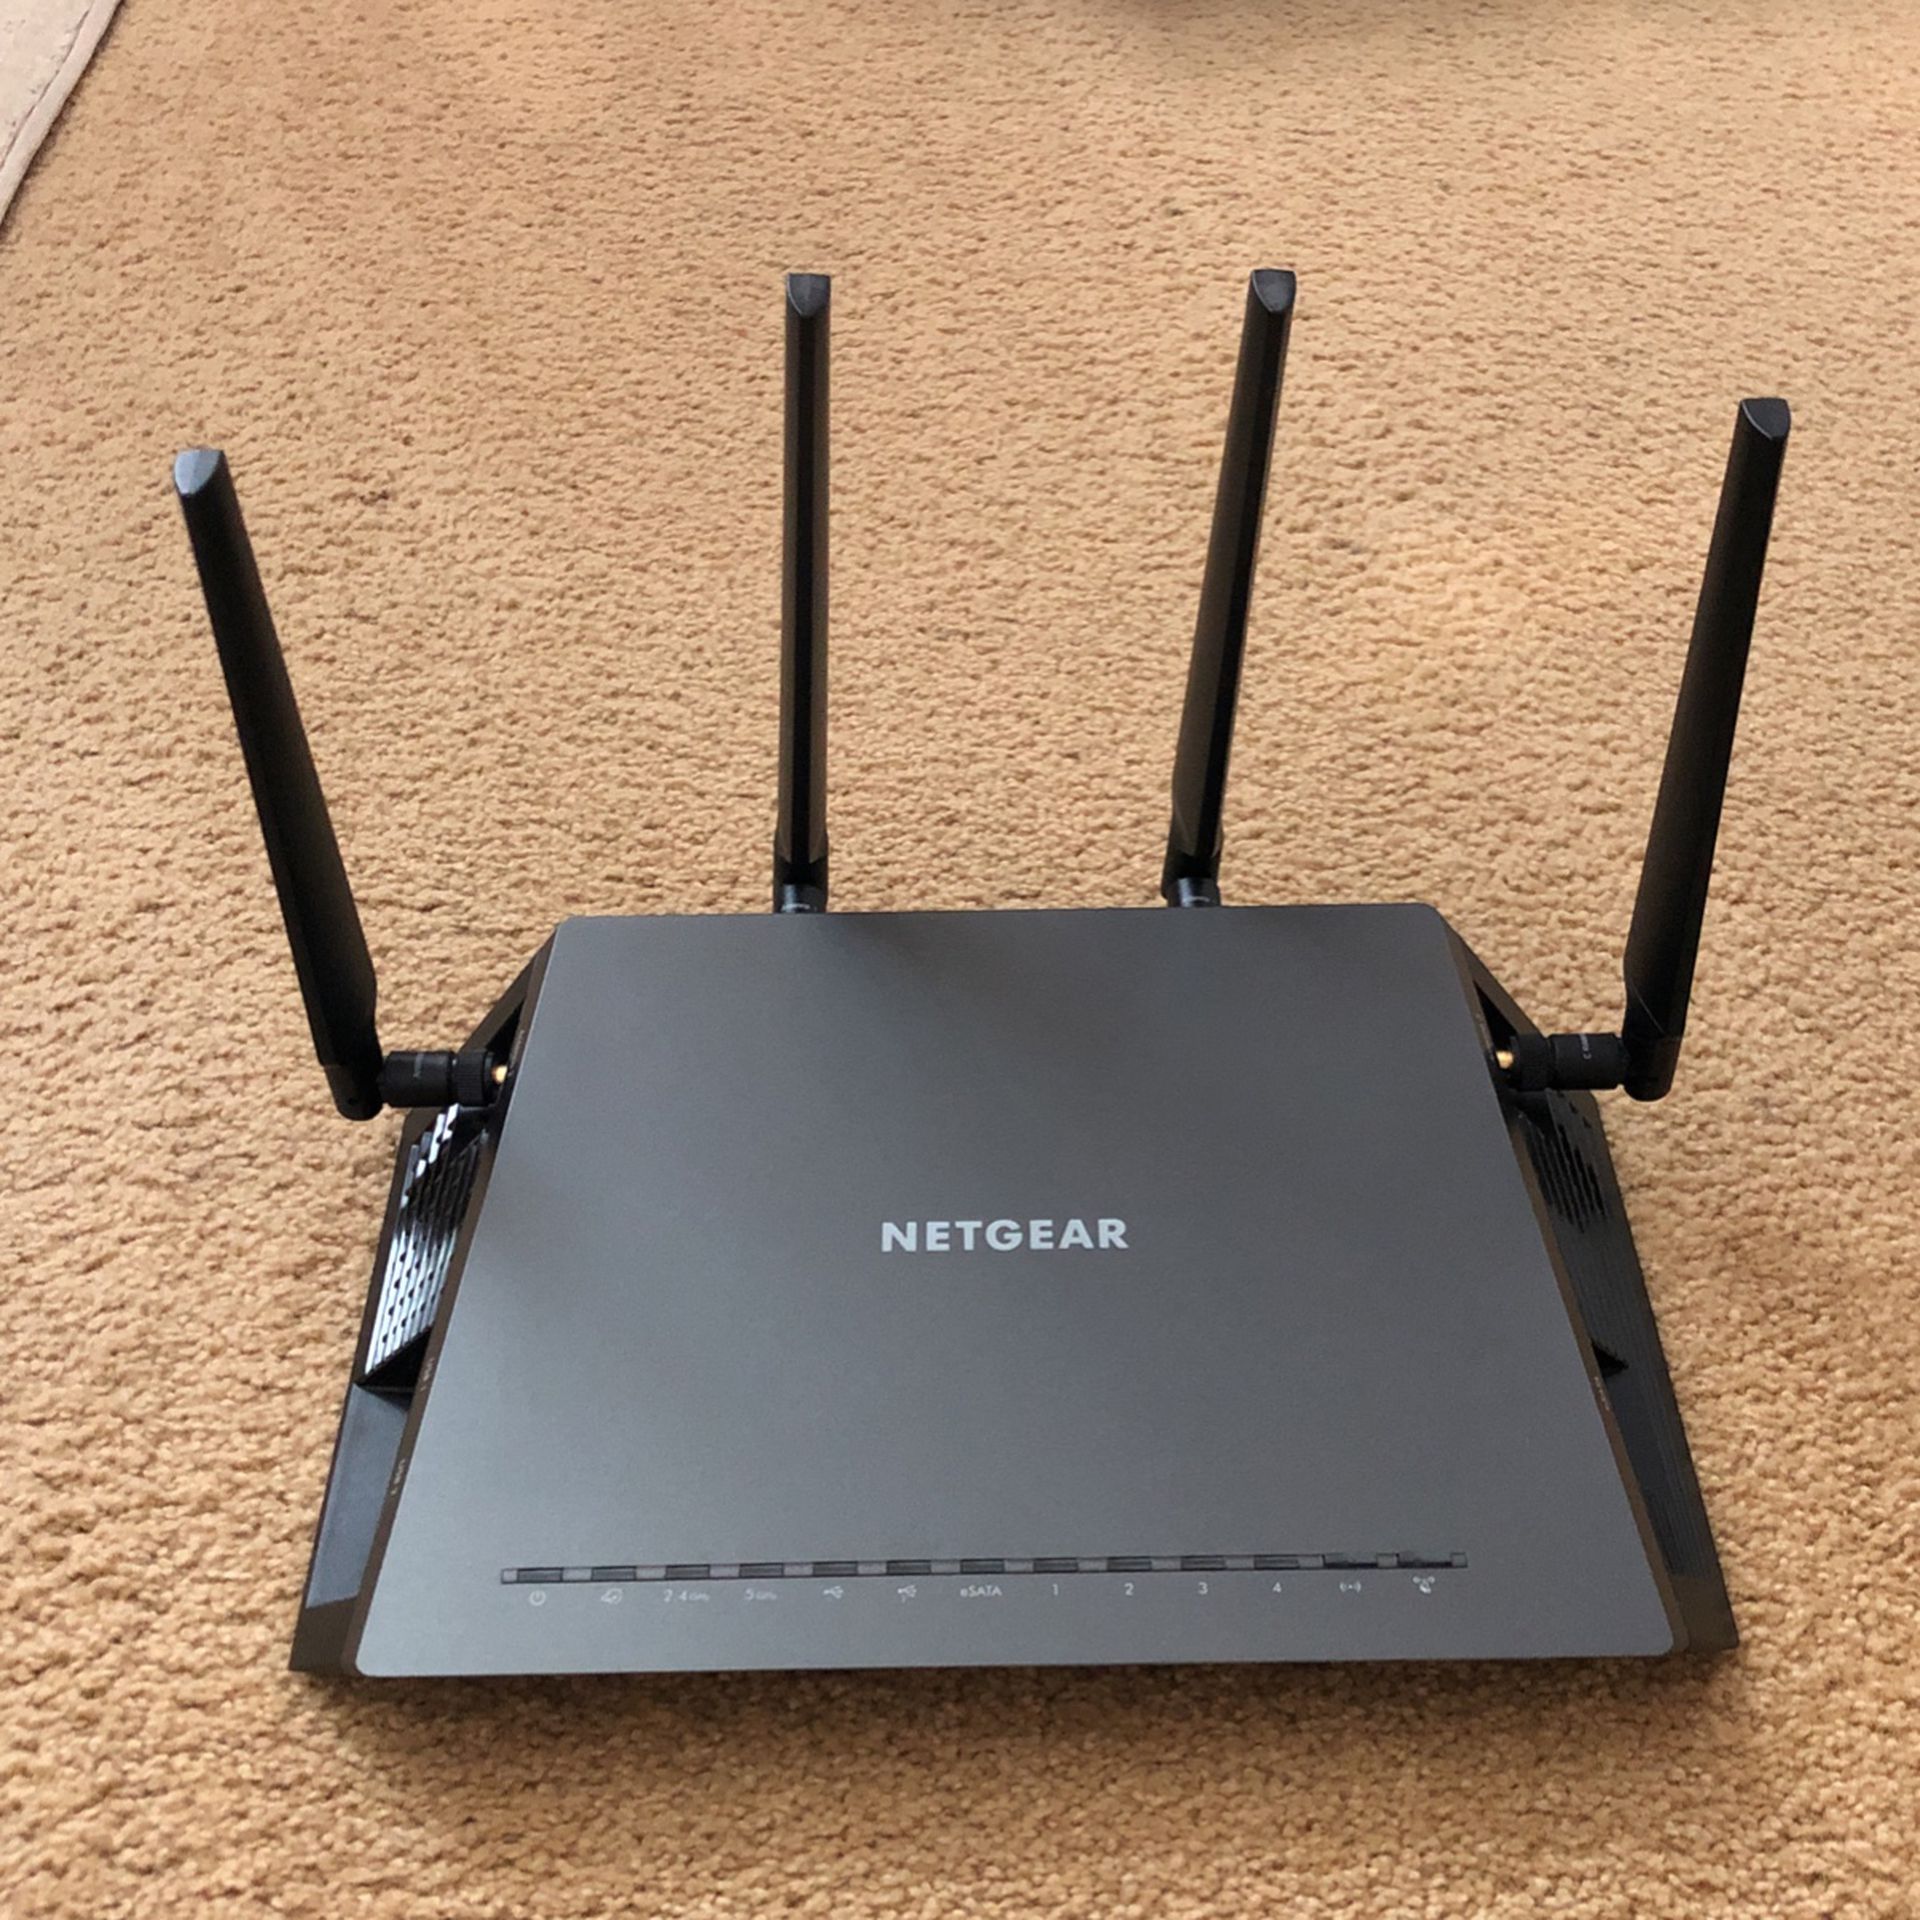 Netgear Nighthawk X4 Dual Band Wifi Router